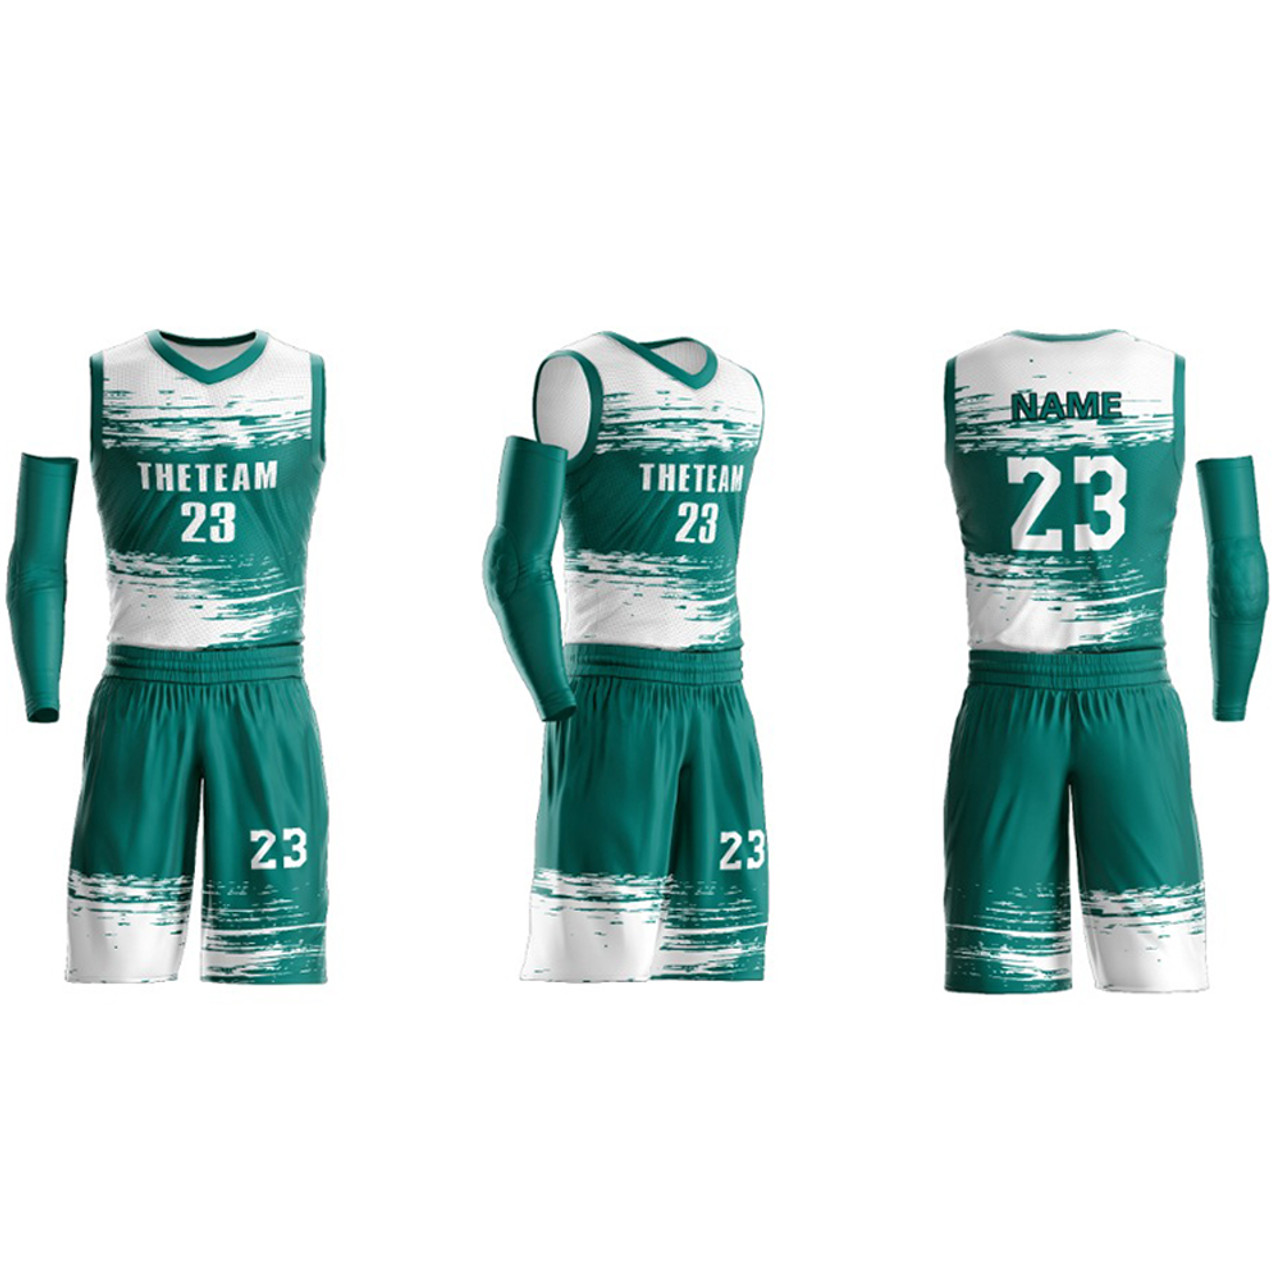 Mianriz22: I will design and manufacture basketball uniform for